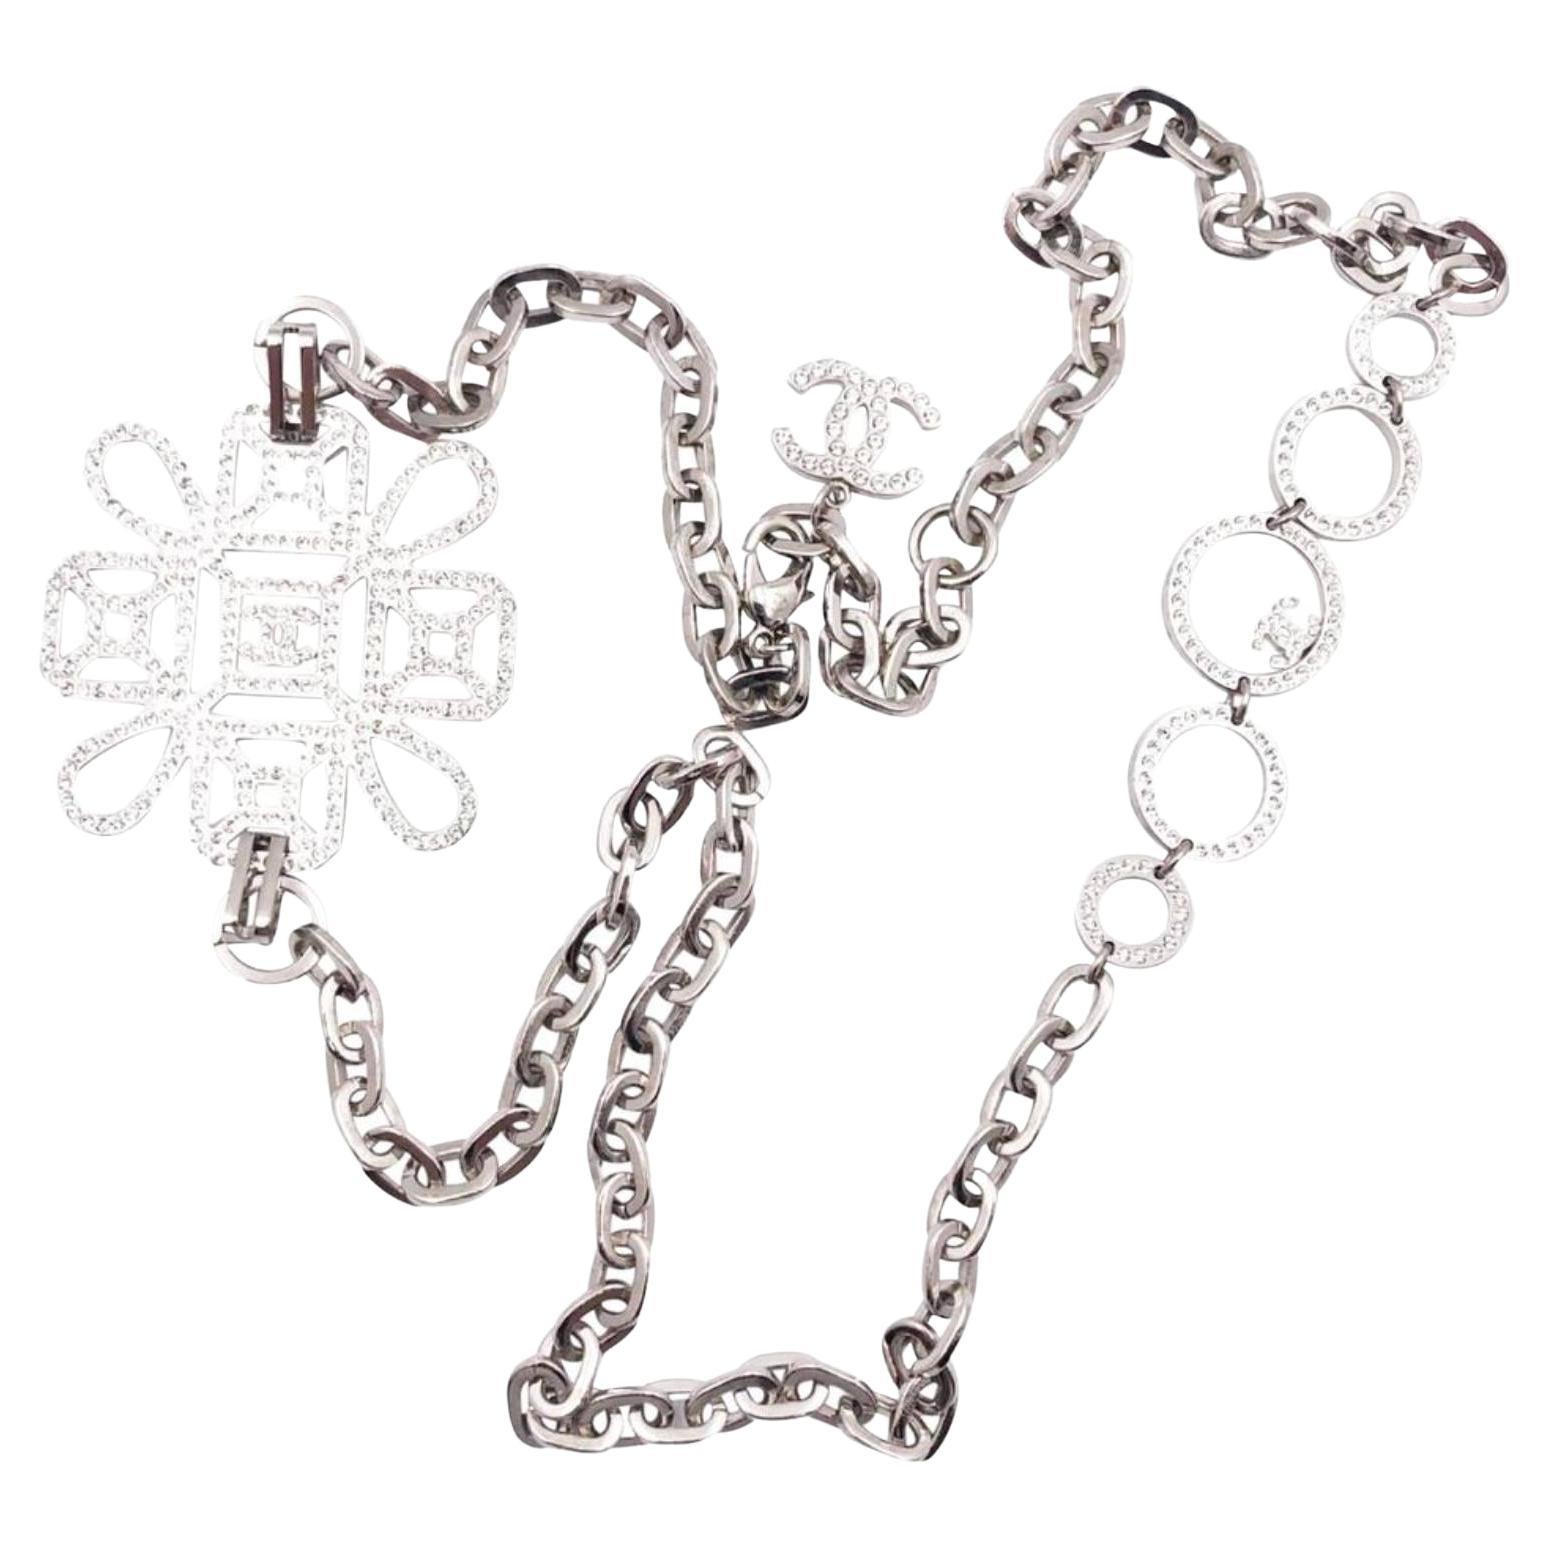 chanel necklace cc logo silver